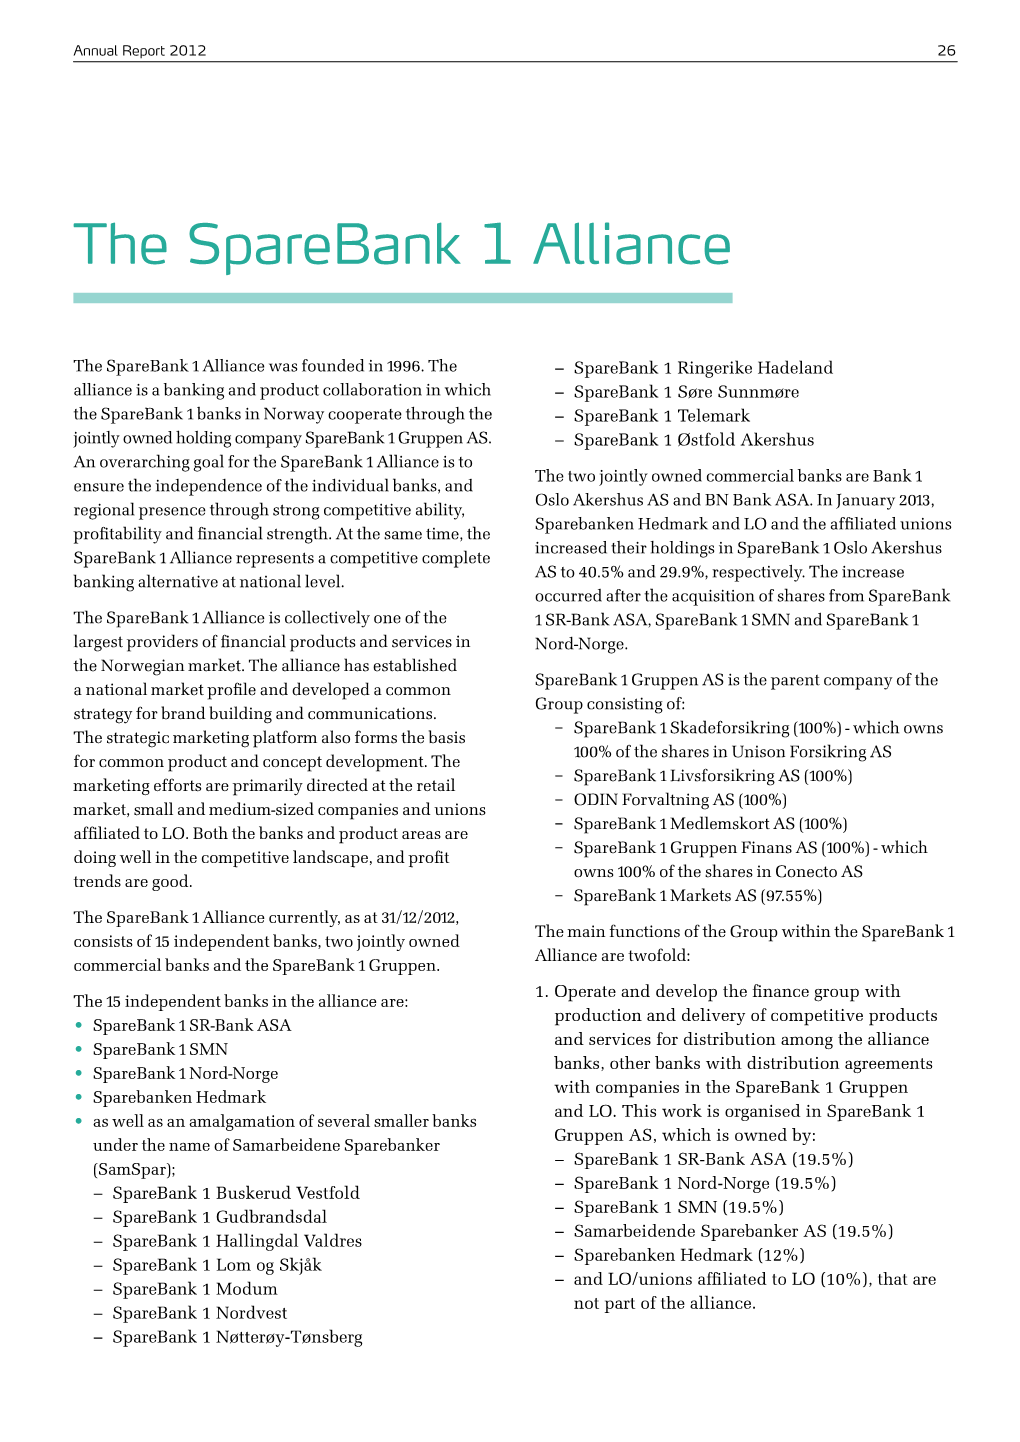 The Sparebank 1 Alliance